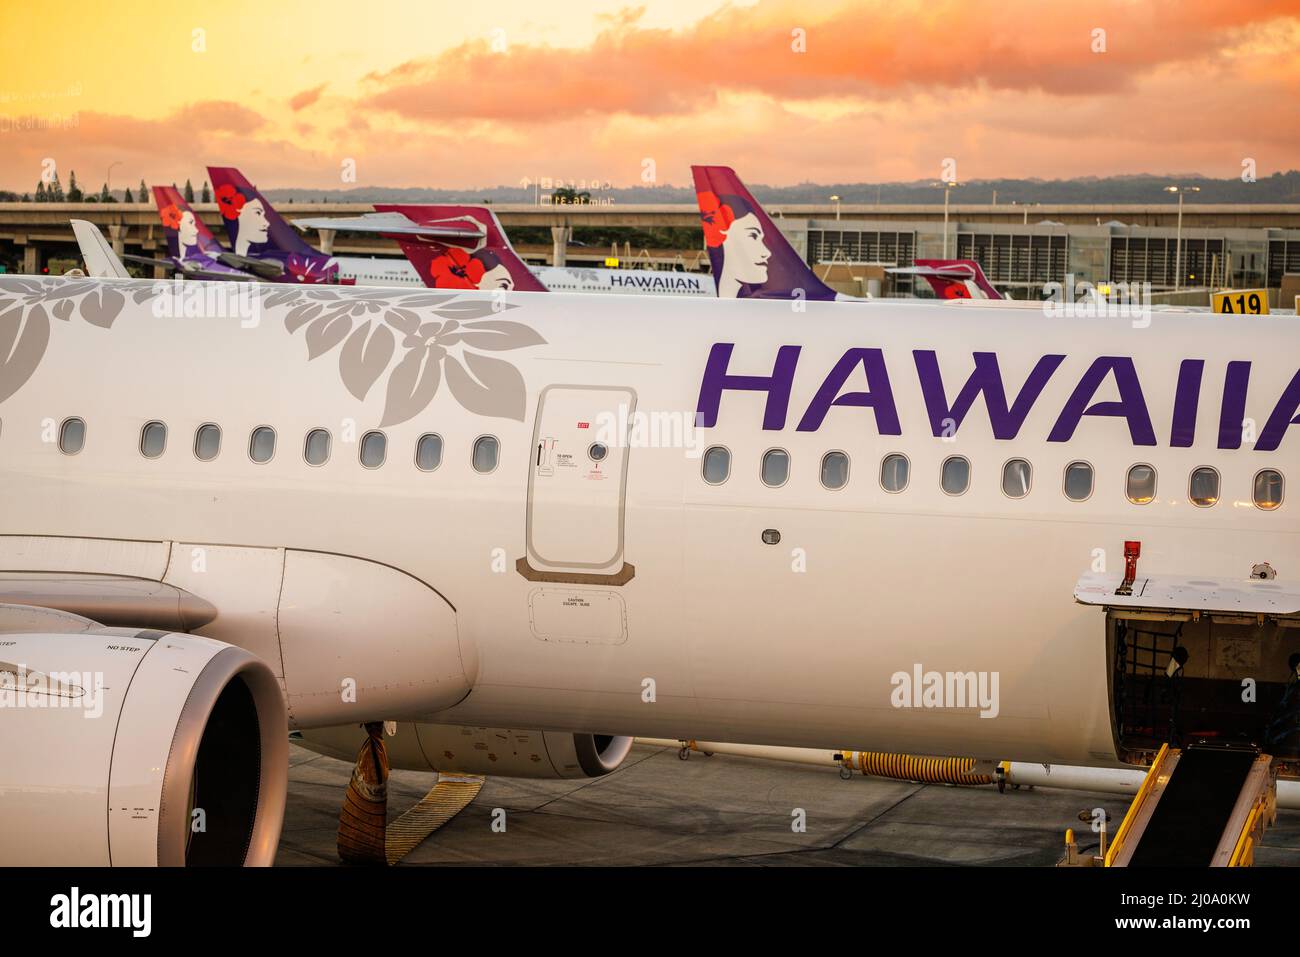 A sunset view across Hawaiian Airlines jets at the Interisland Terminal at the Honolulu International Airport, Oahu, Hawaii, USA. Stock Photo